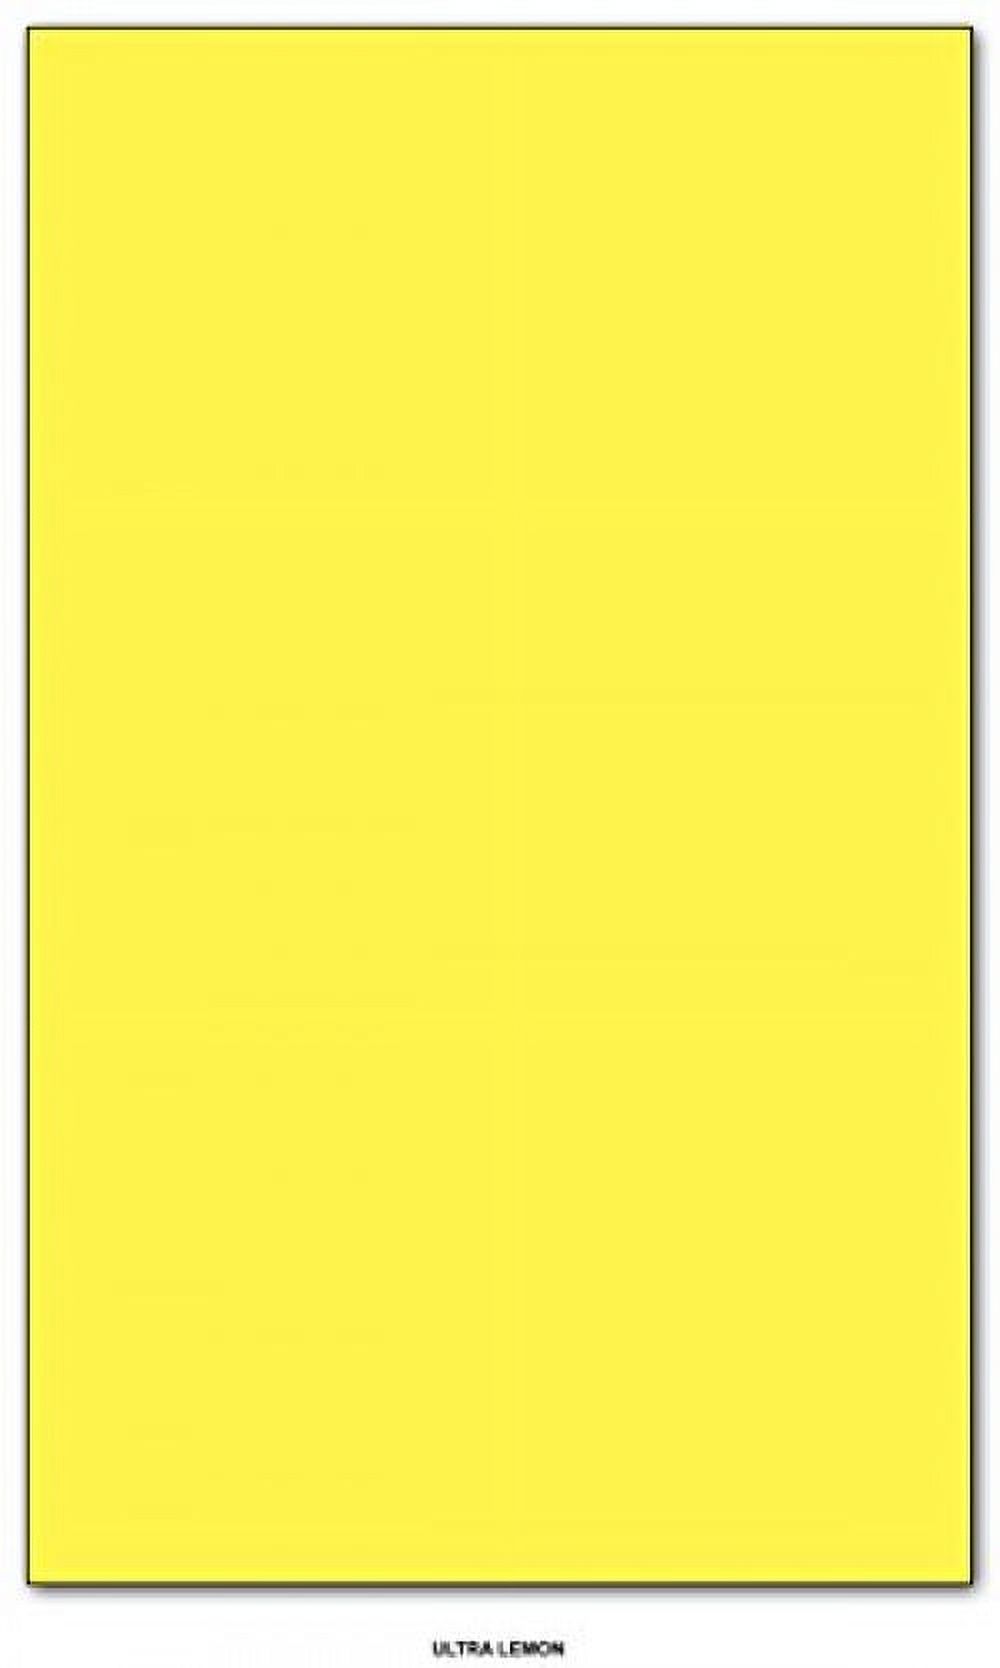 Mohawk BriteHue Bright Color Paper | Ultra Lemon | 24lb Bond / 60lb Text Paper | 8.5" x 14" (Legal Size) | 100 Sheets Per Pack - image 2 of 2